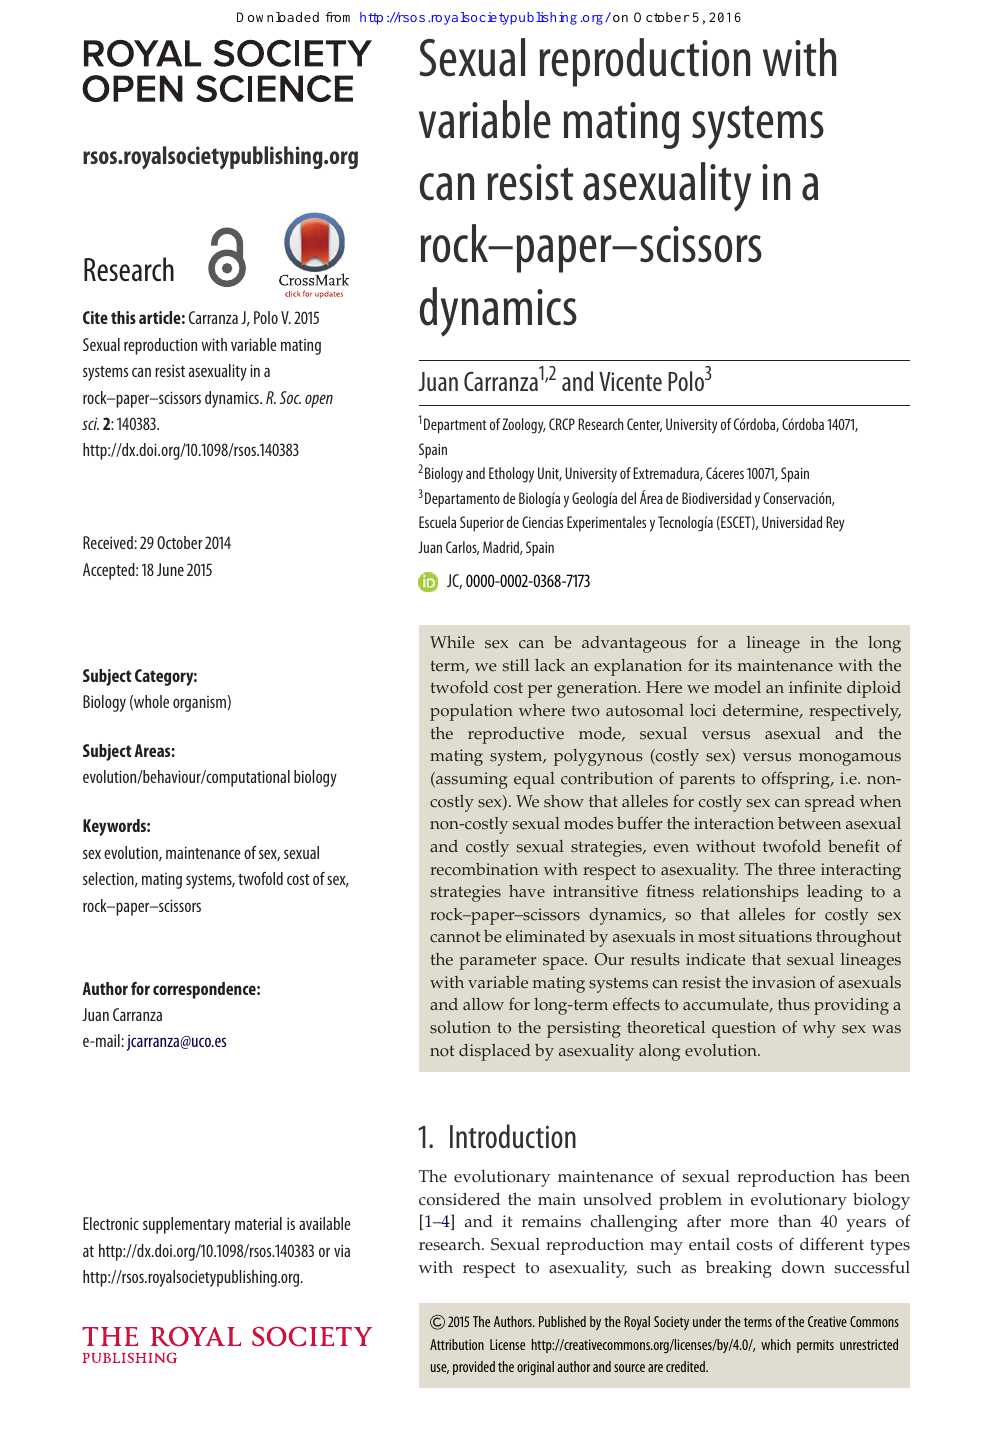 Rock-paper-scissors may explain evolutionary 'games' in nature